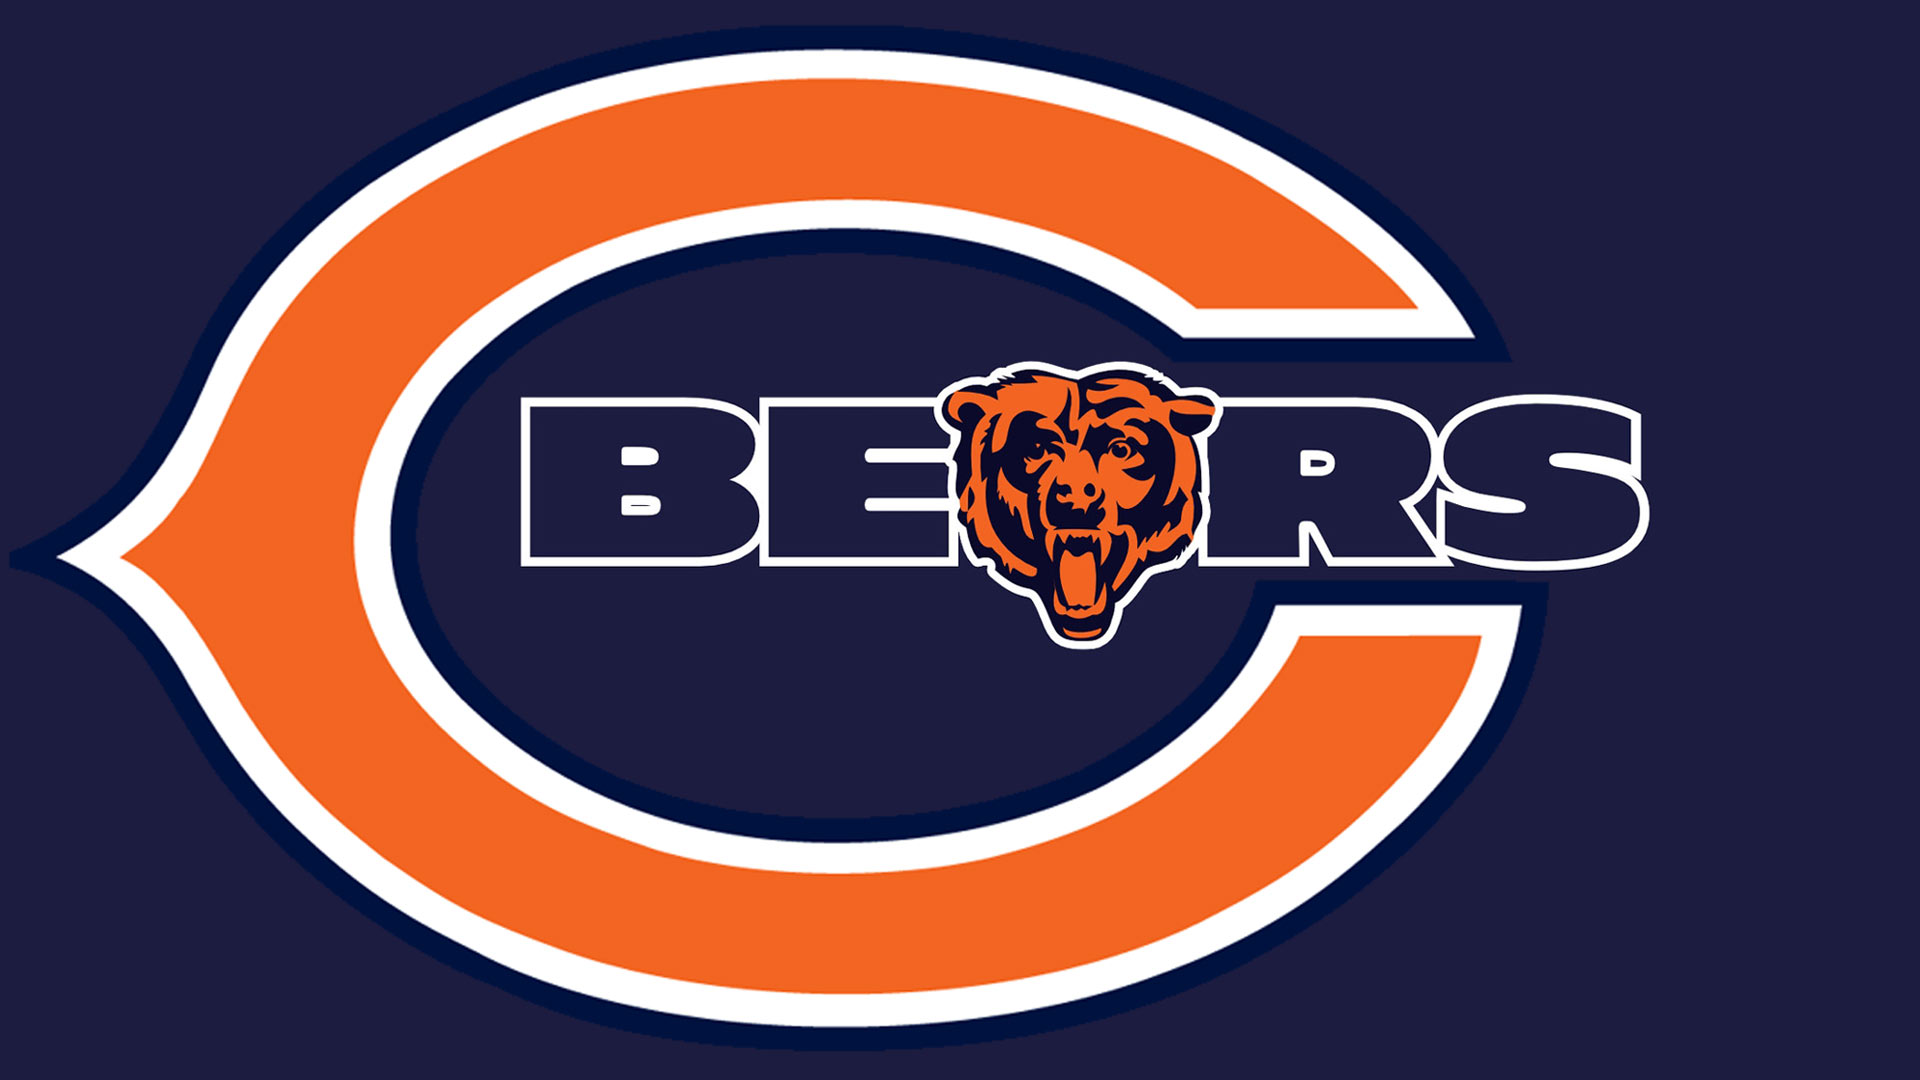 Chicago Bears Logo HD 1080p Wallpaper Screen Size